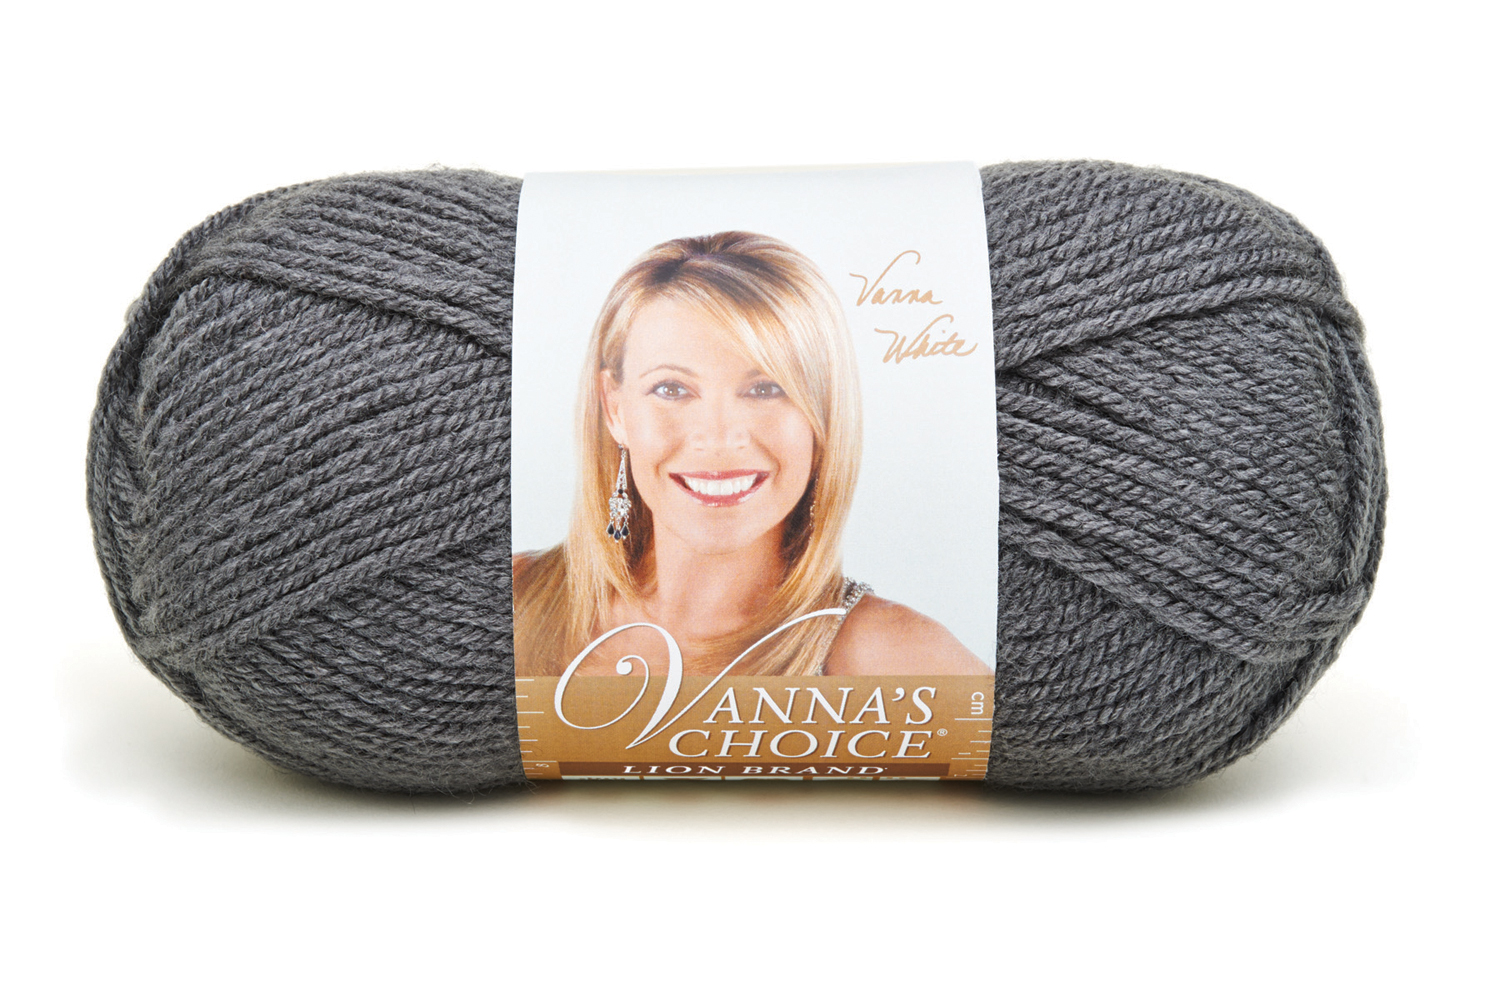 Vanna's Choice yarn in Charcoal Grey